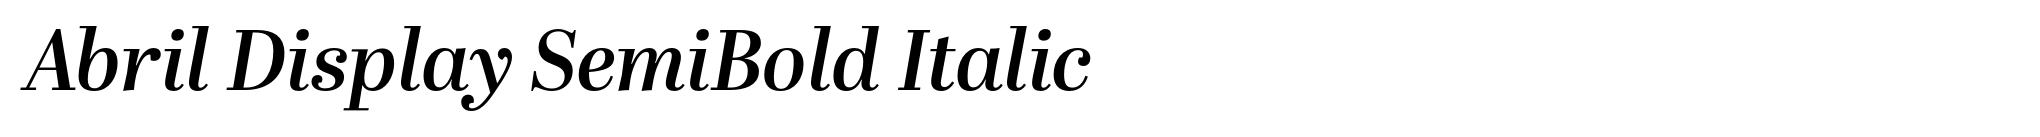 Abril Display SemiBold Italic image